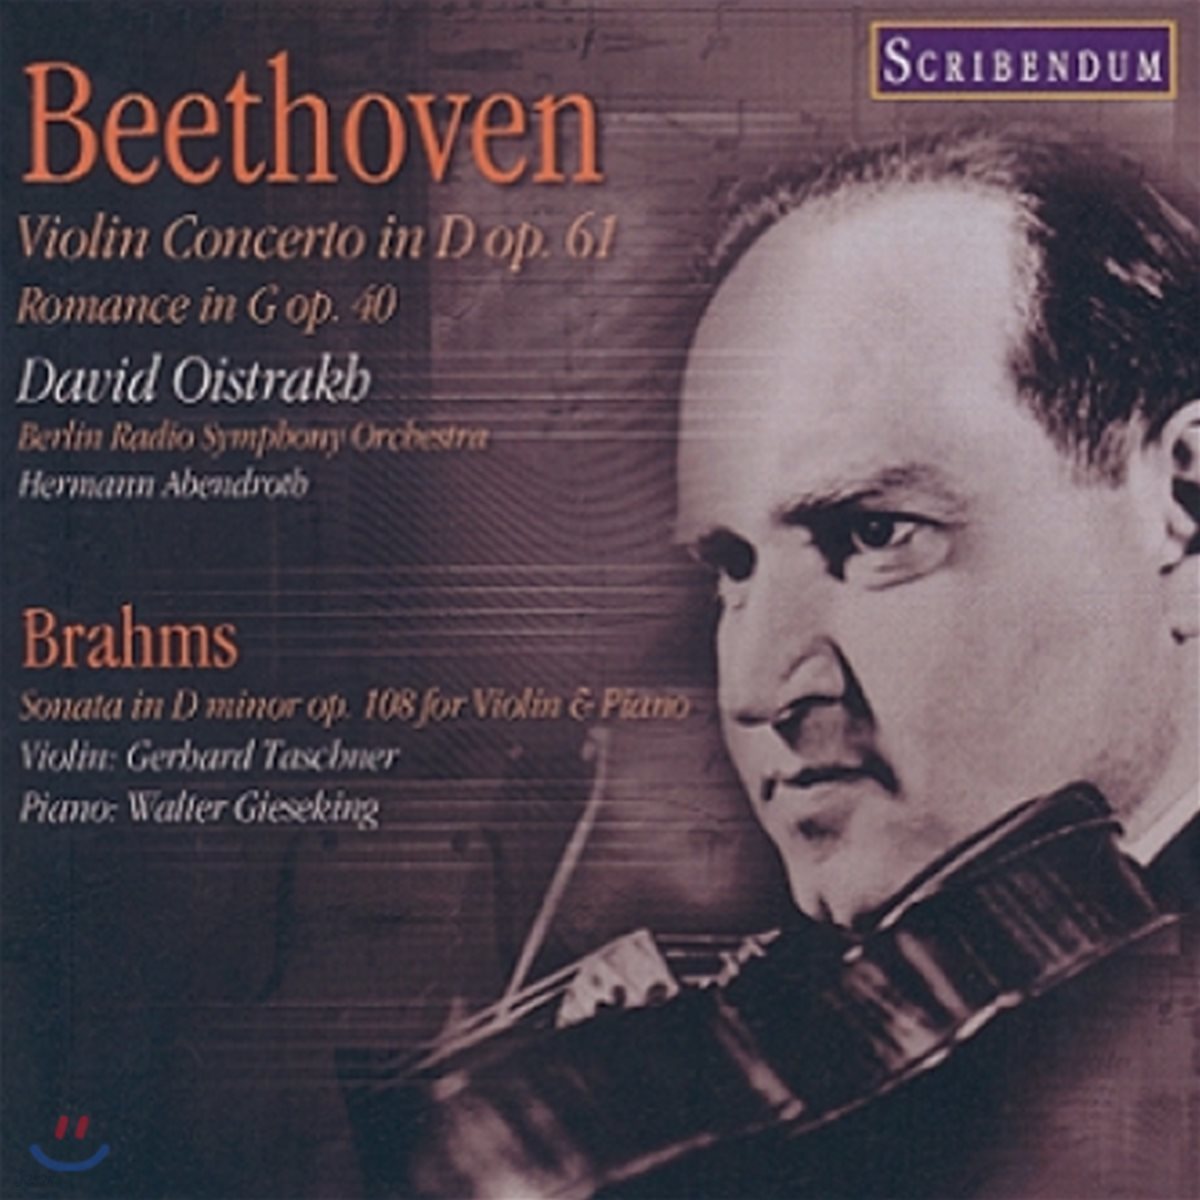 David Oistrakh 베토벤: 바이올린 협주곡, 로망스 1번 / 브람스: 소나타 3번 - 다비드 오이스트라흐 (Beethoven: Violin Concerto Op.61, Romance Op.40 / Brahms: Sonata Op.108) 